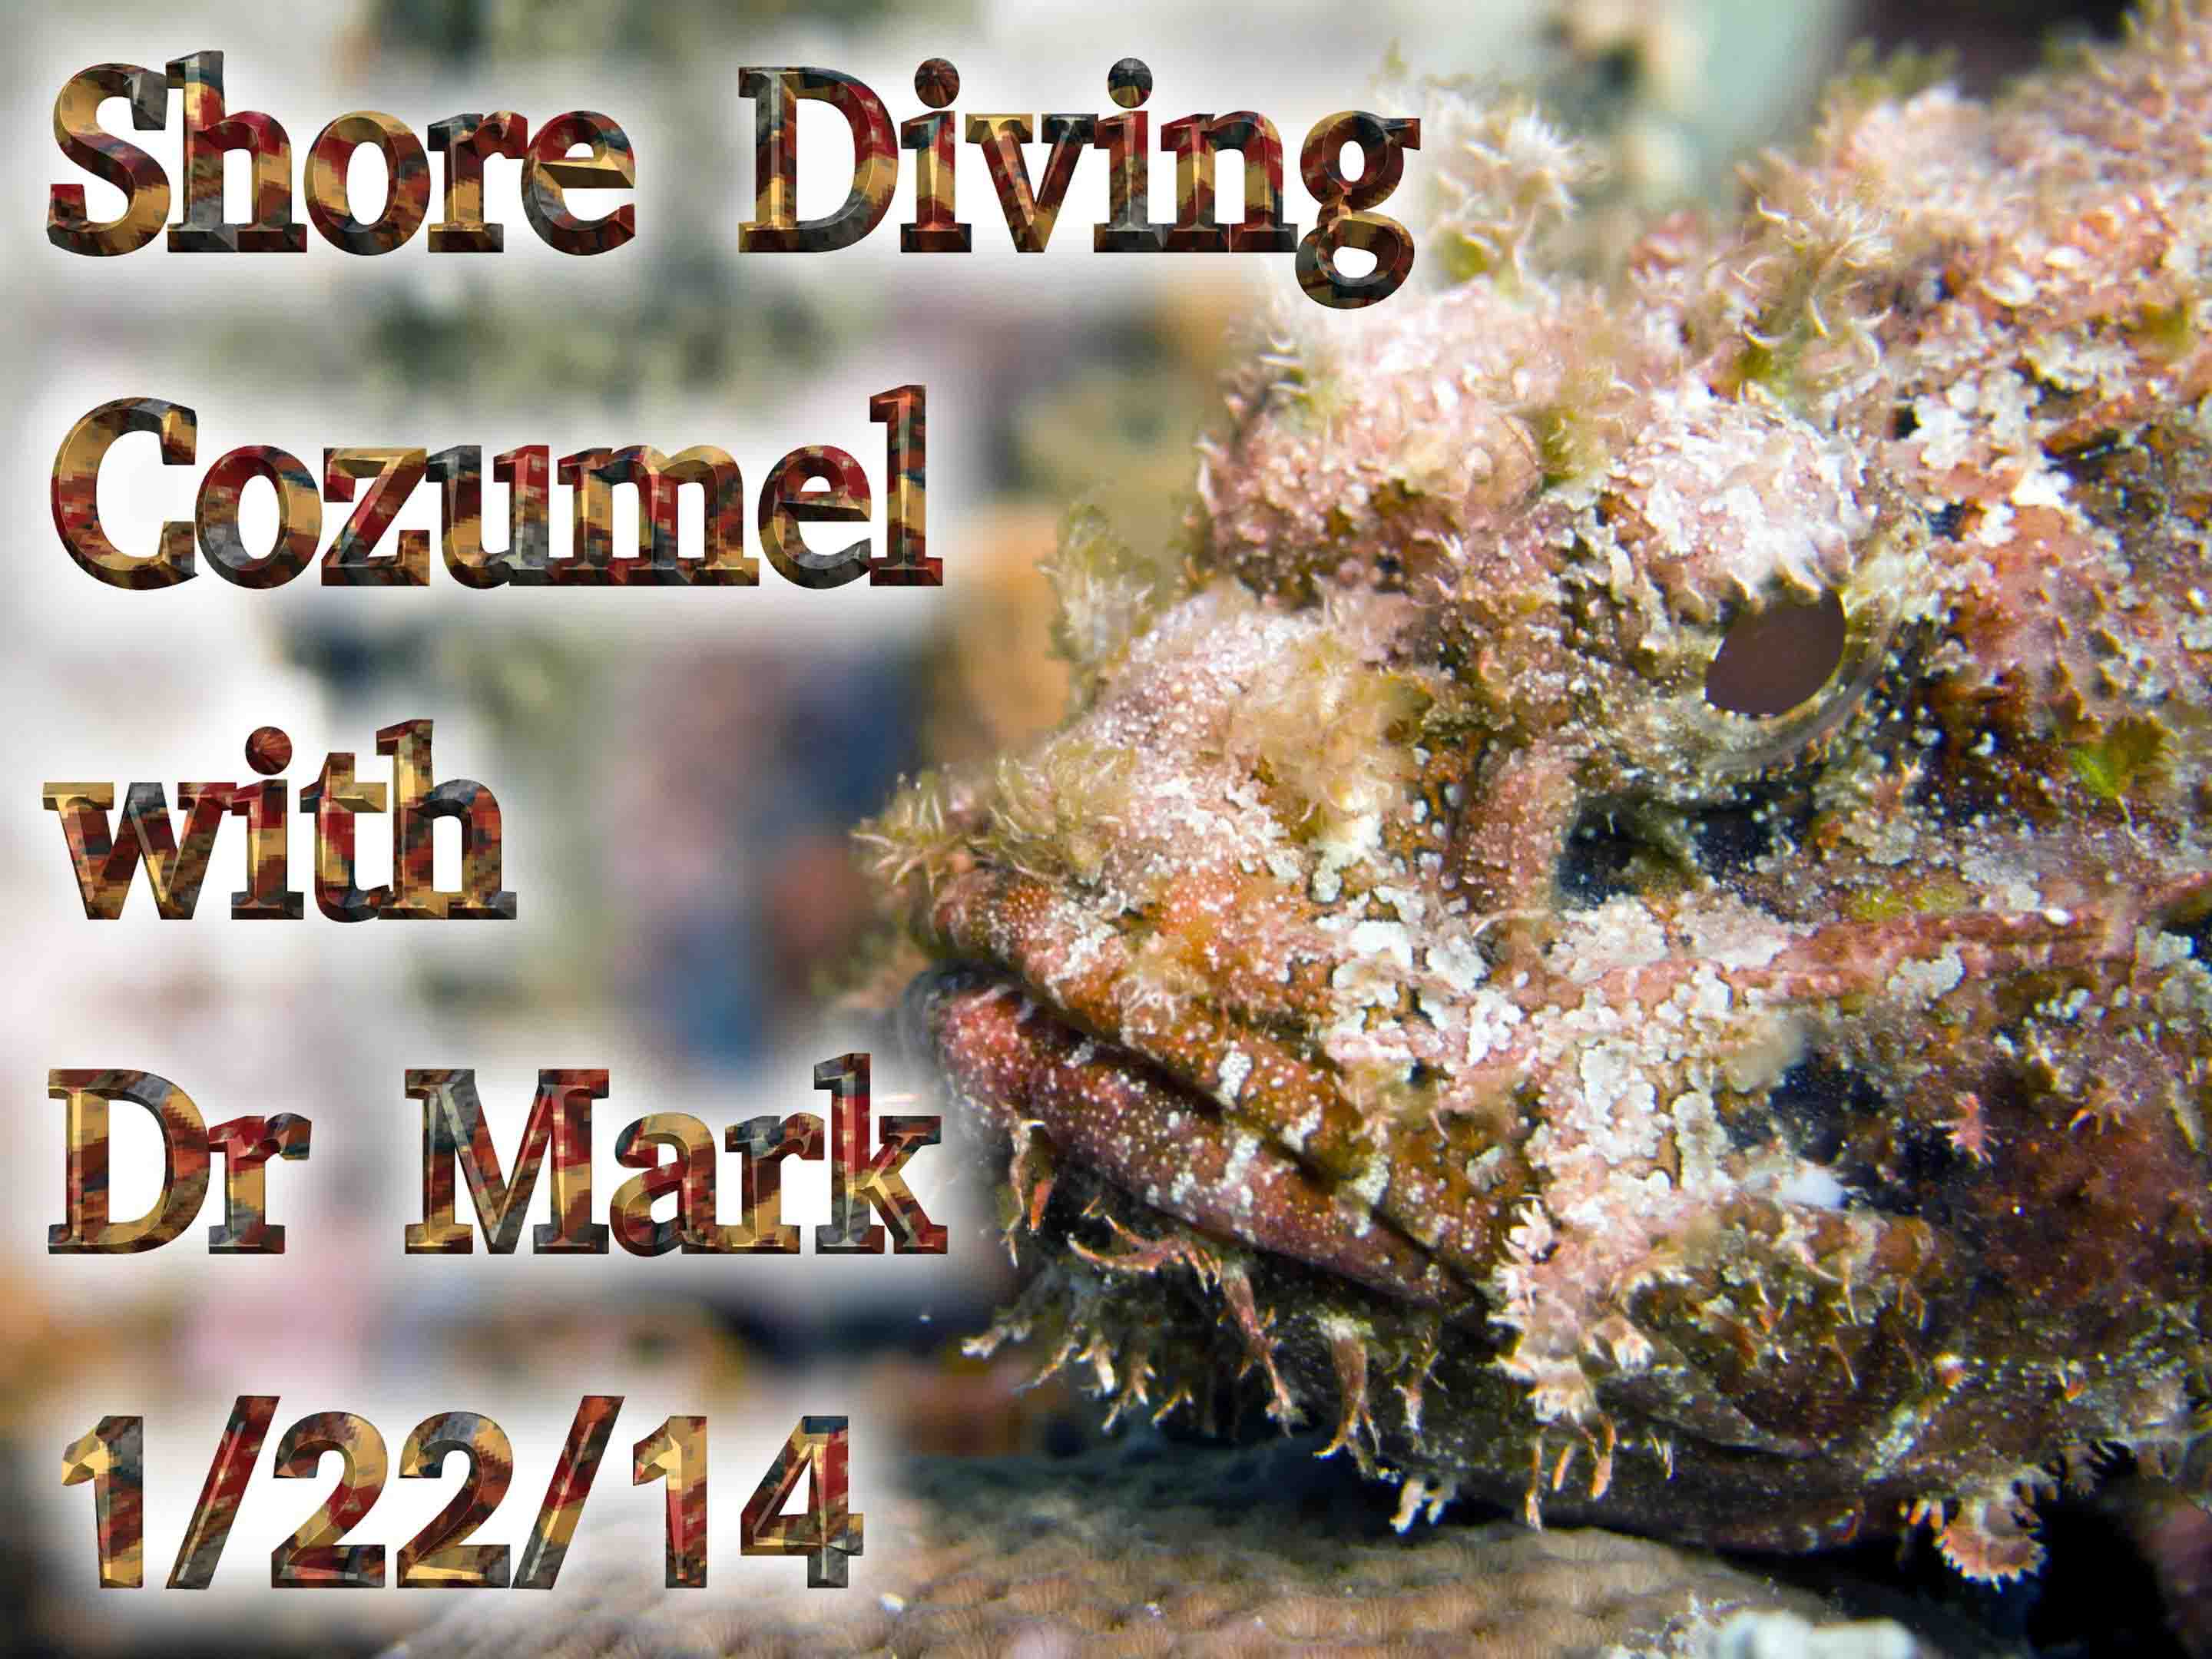 Shore Diving Cozumel 1-22-14